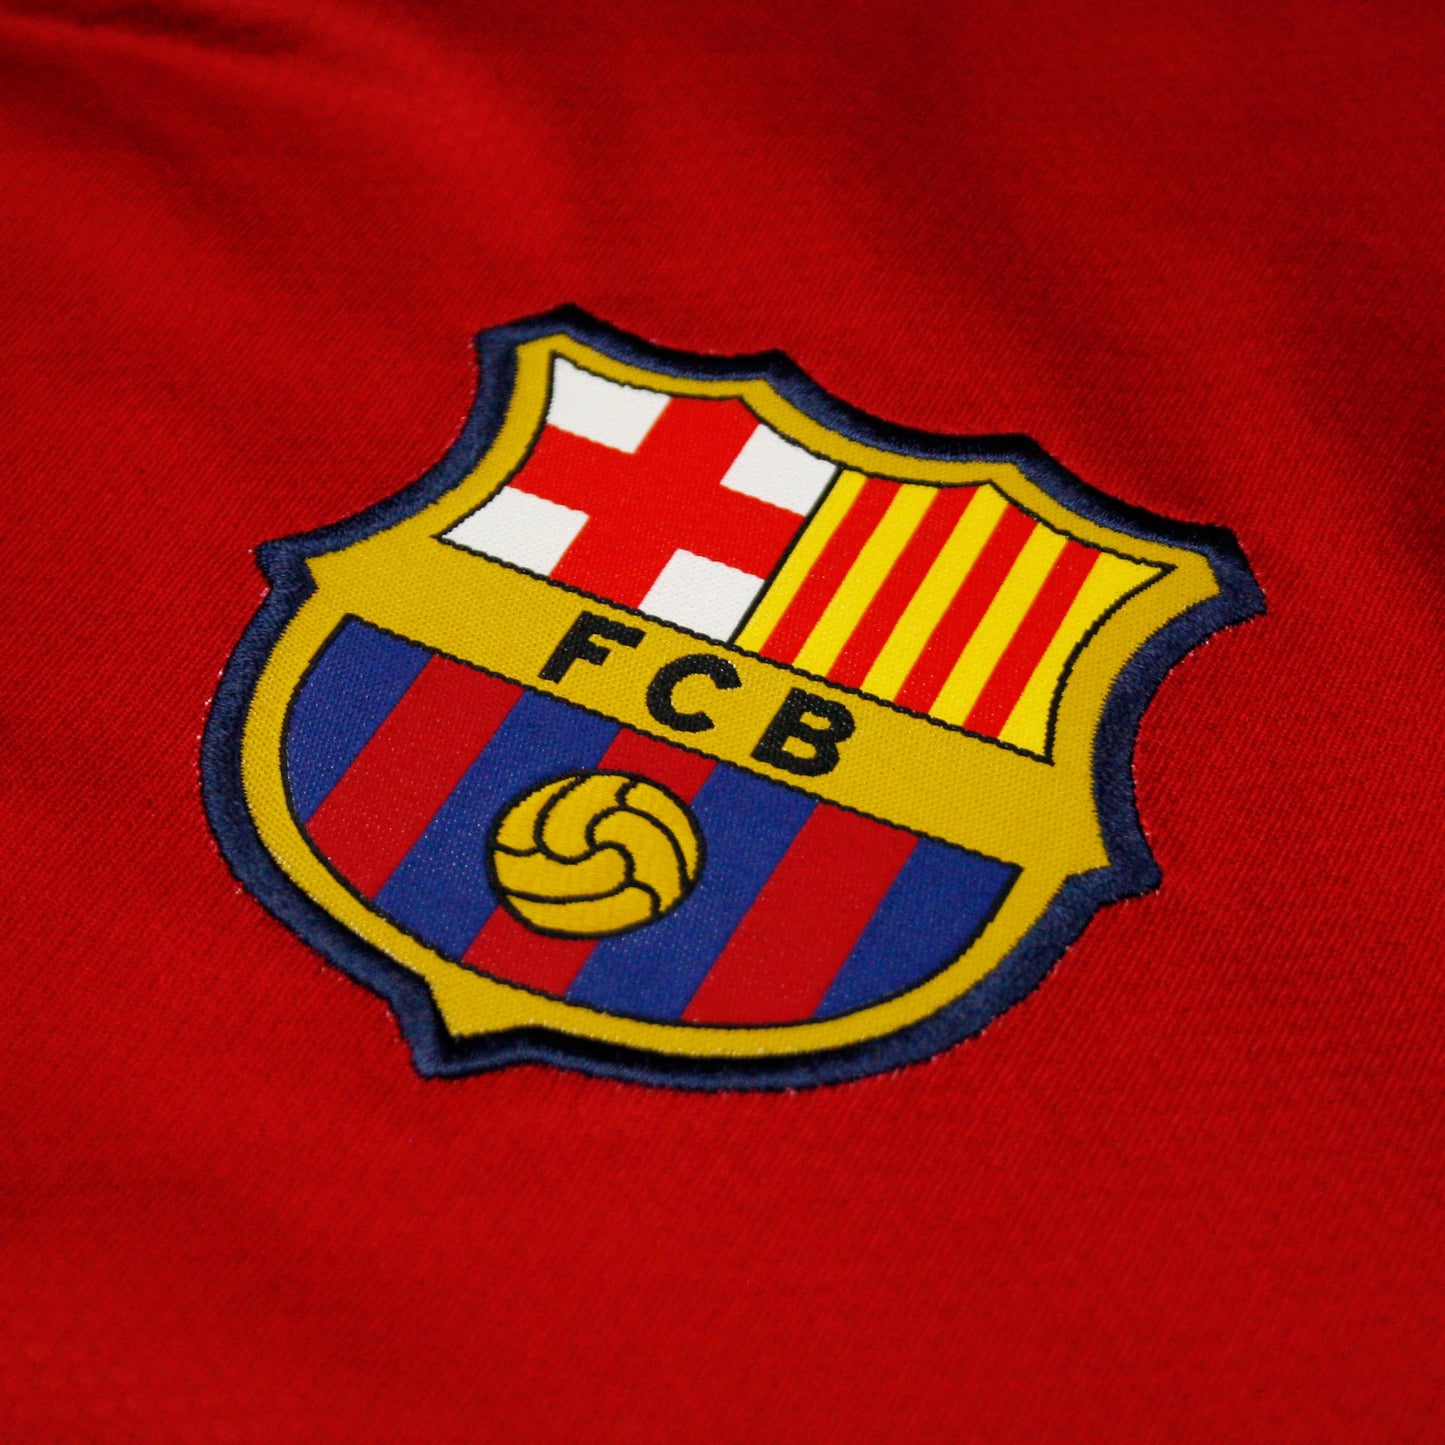 Barcelona "Messi" 08/09 Treyja